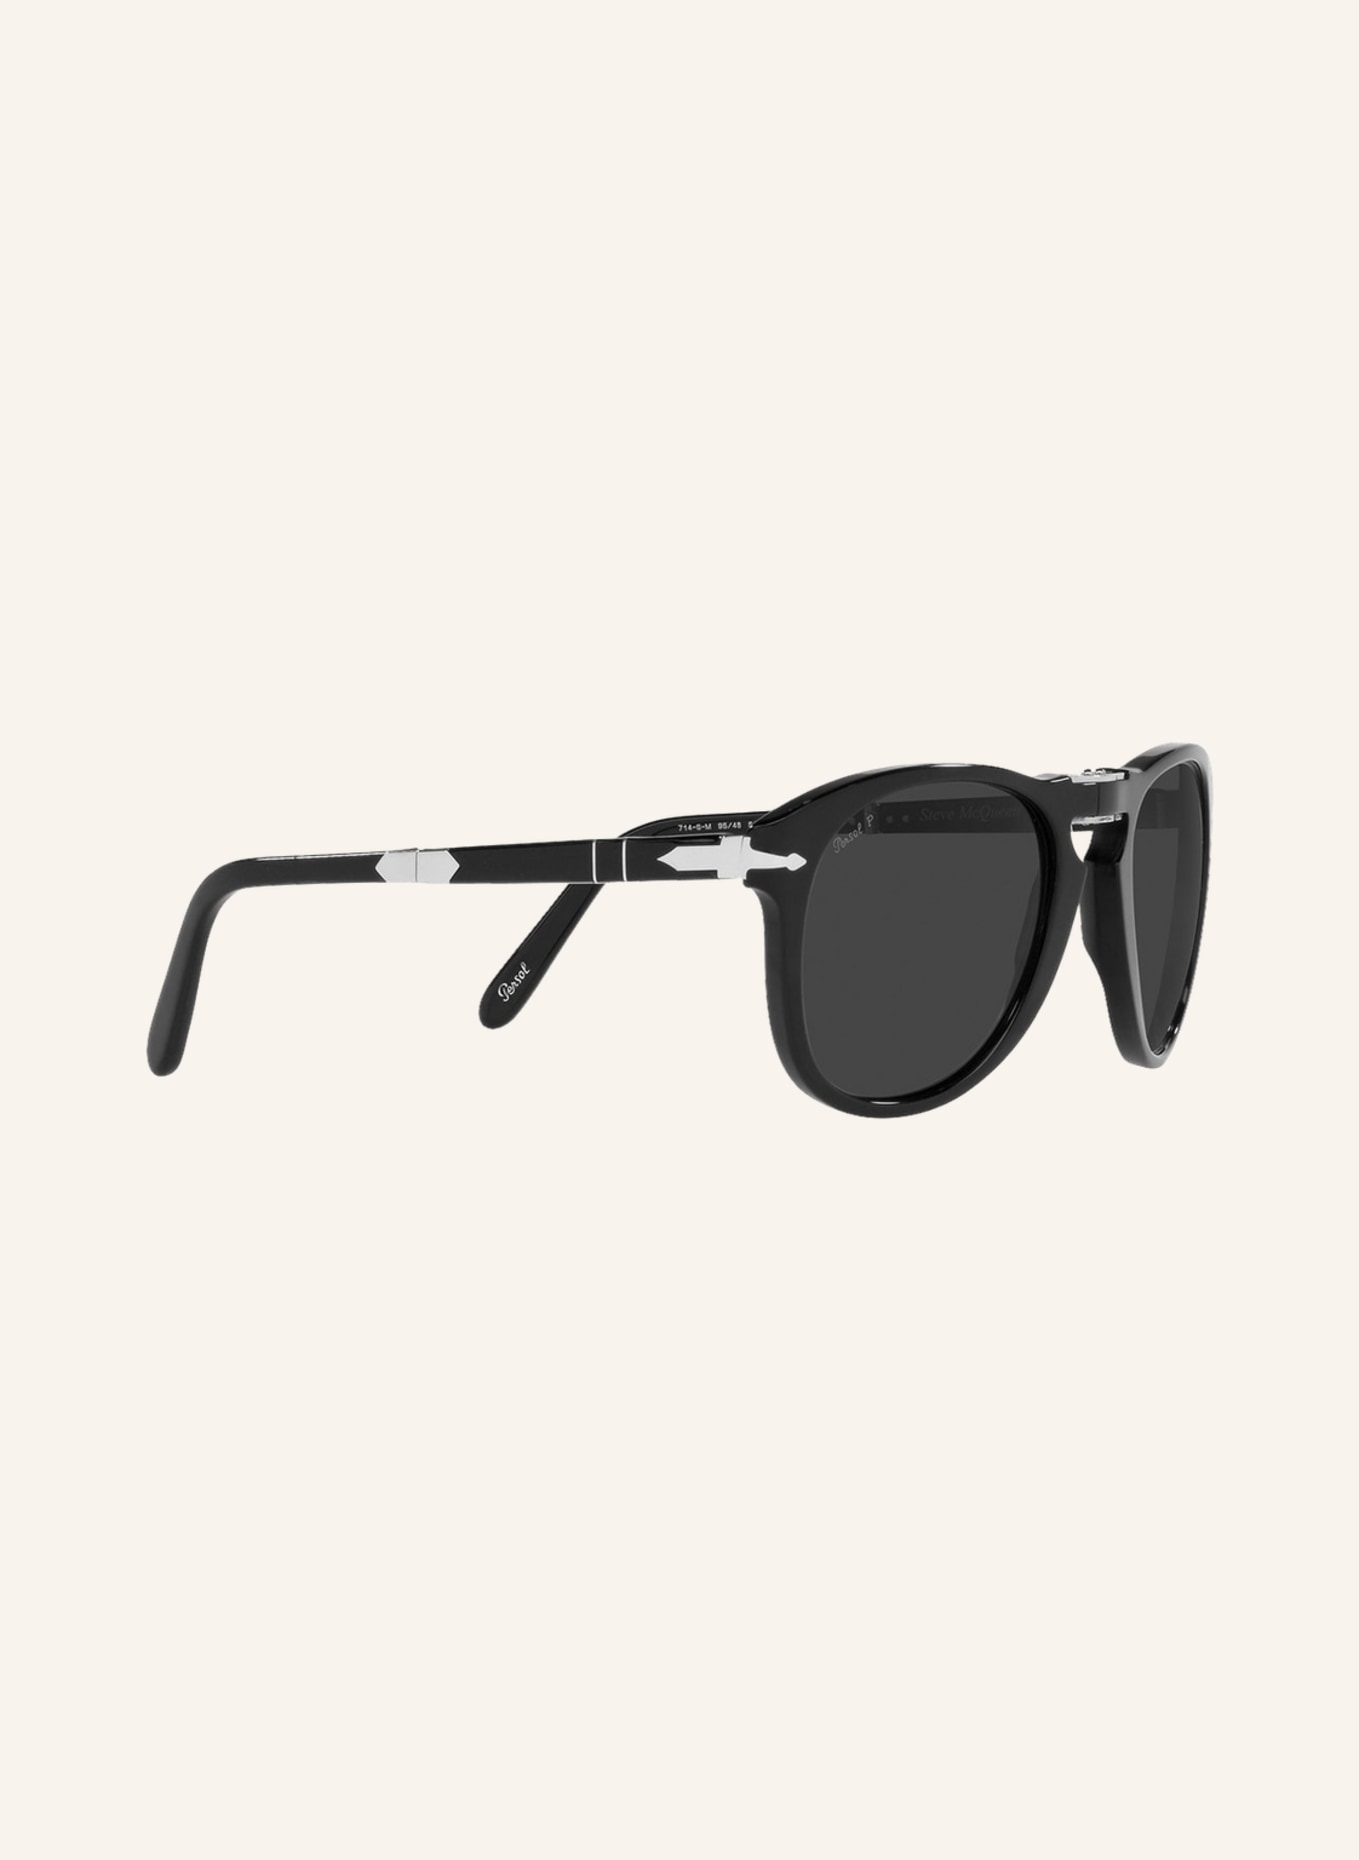 Sunglasses Persol PO 0649 (1158Q8) Man | Free Shipping Shop Online